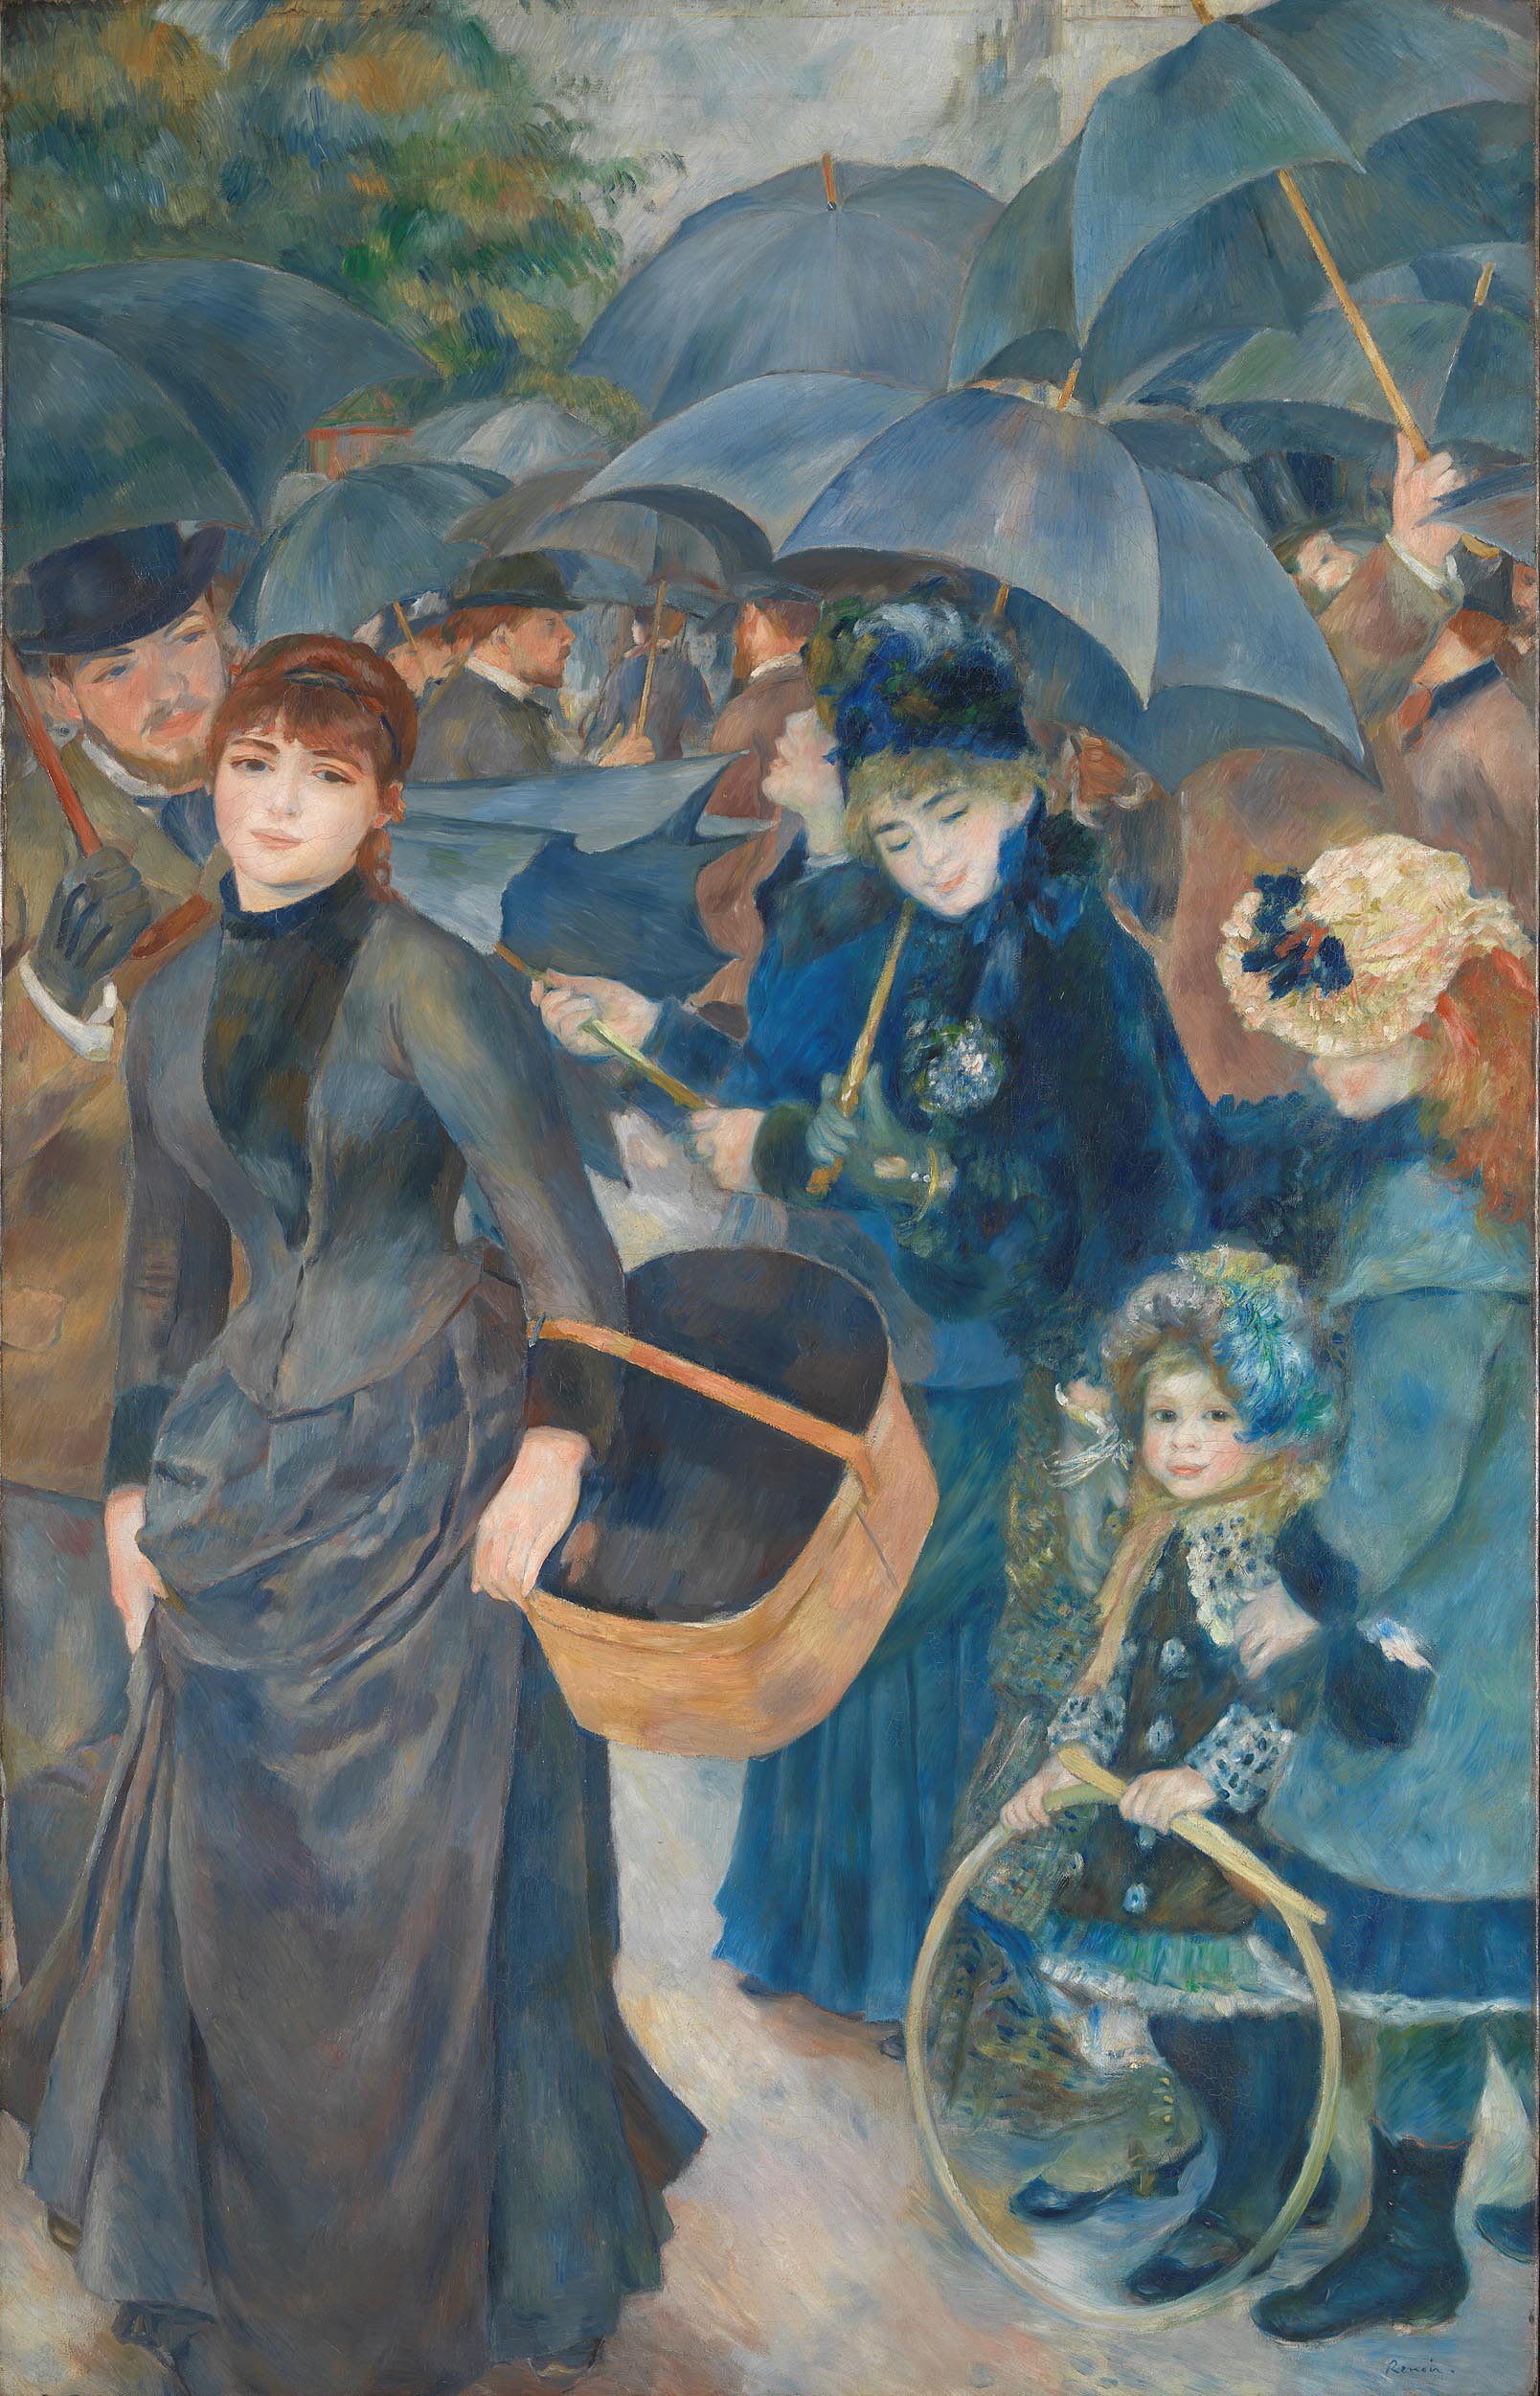 Pierre Auguste Renoir’s masterpiece “The Umbrellas” (c 1886). Photo: The National Gallery London.